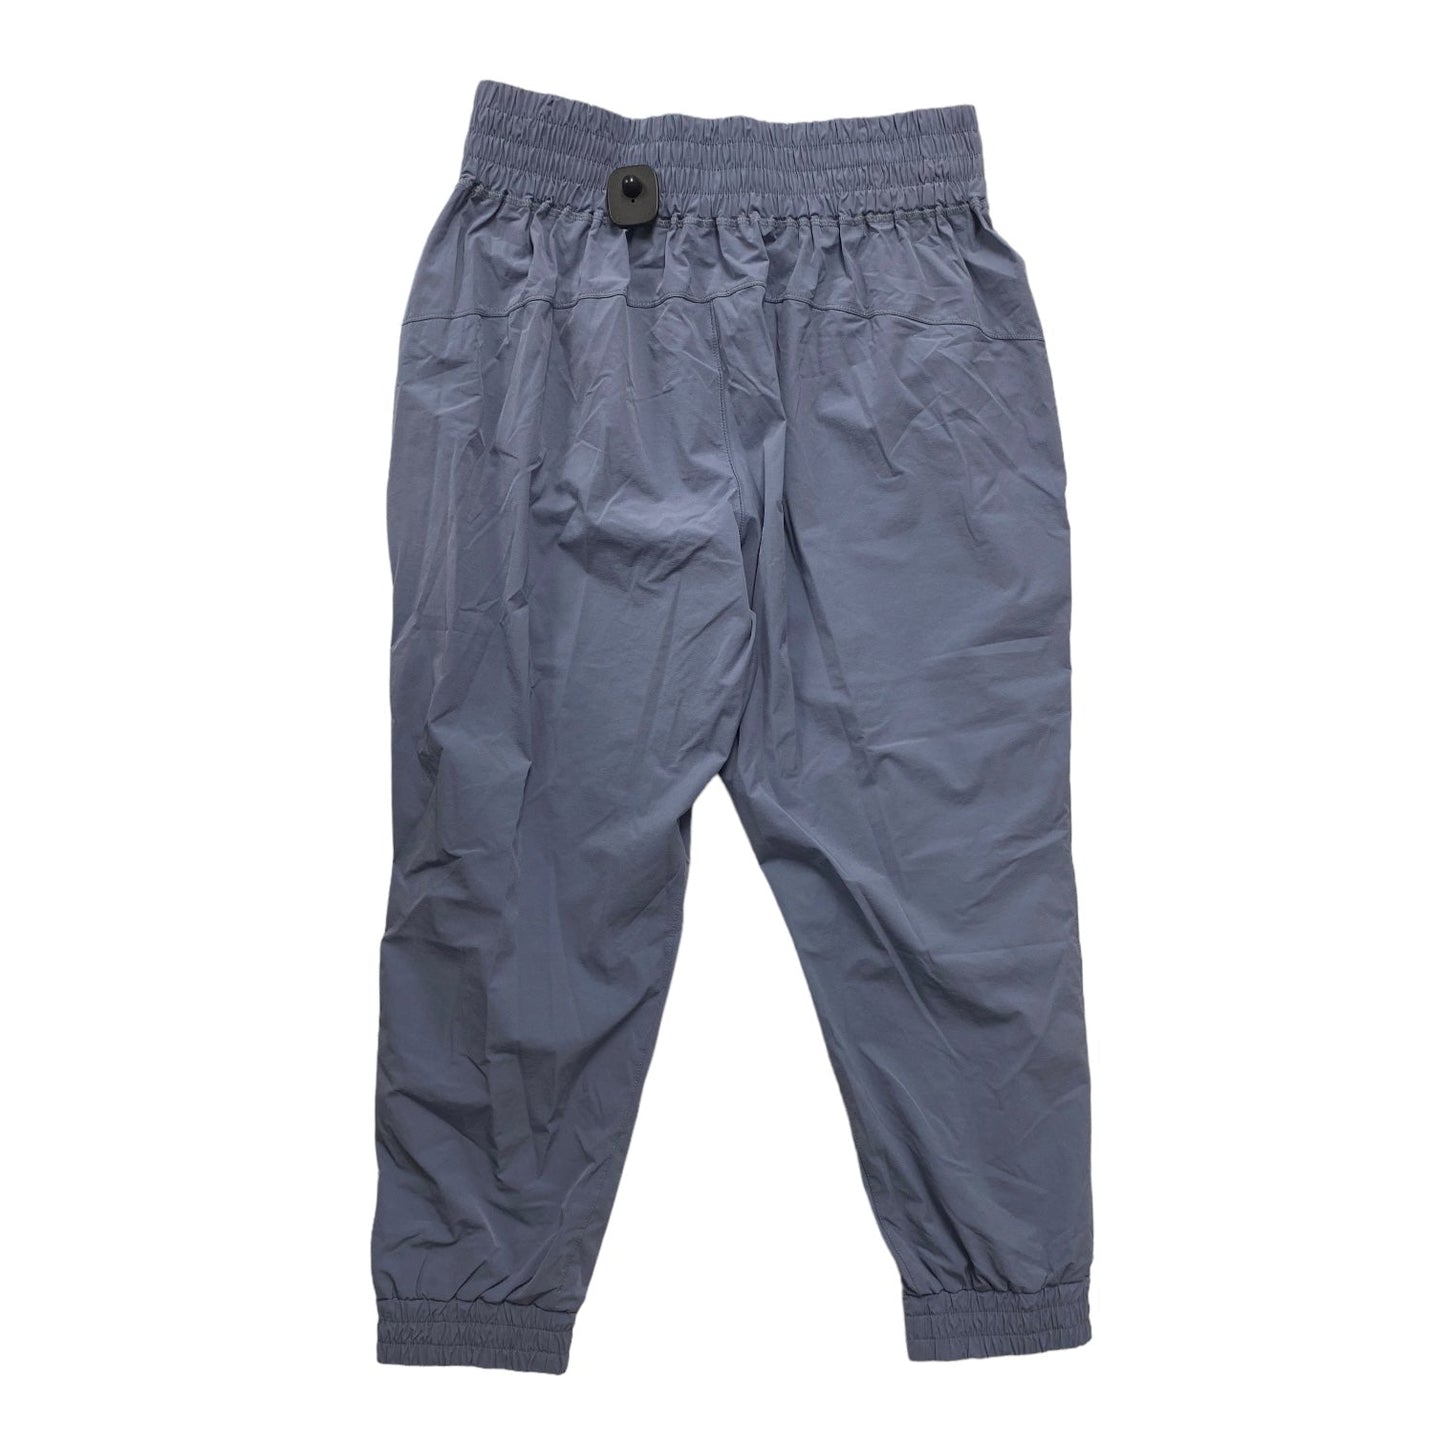 Blue Athletic Pants HALARA, Size 1x